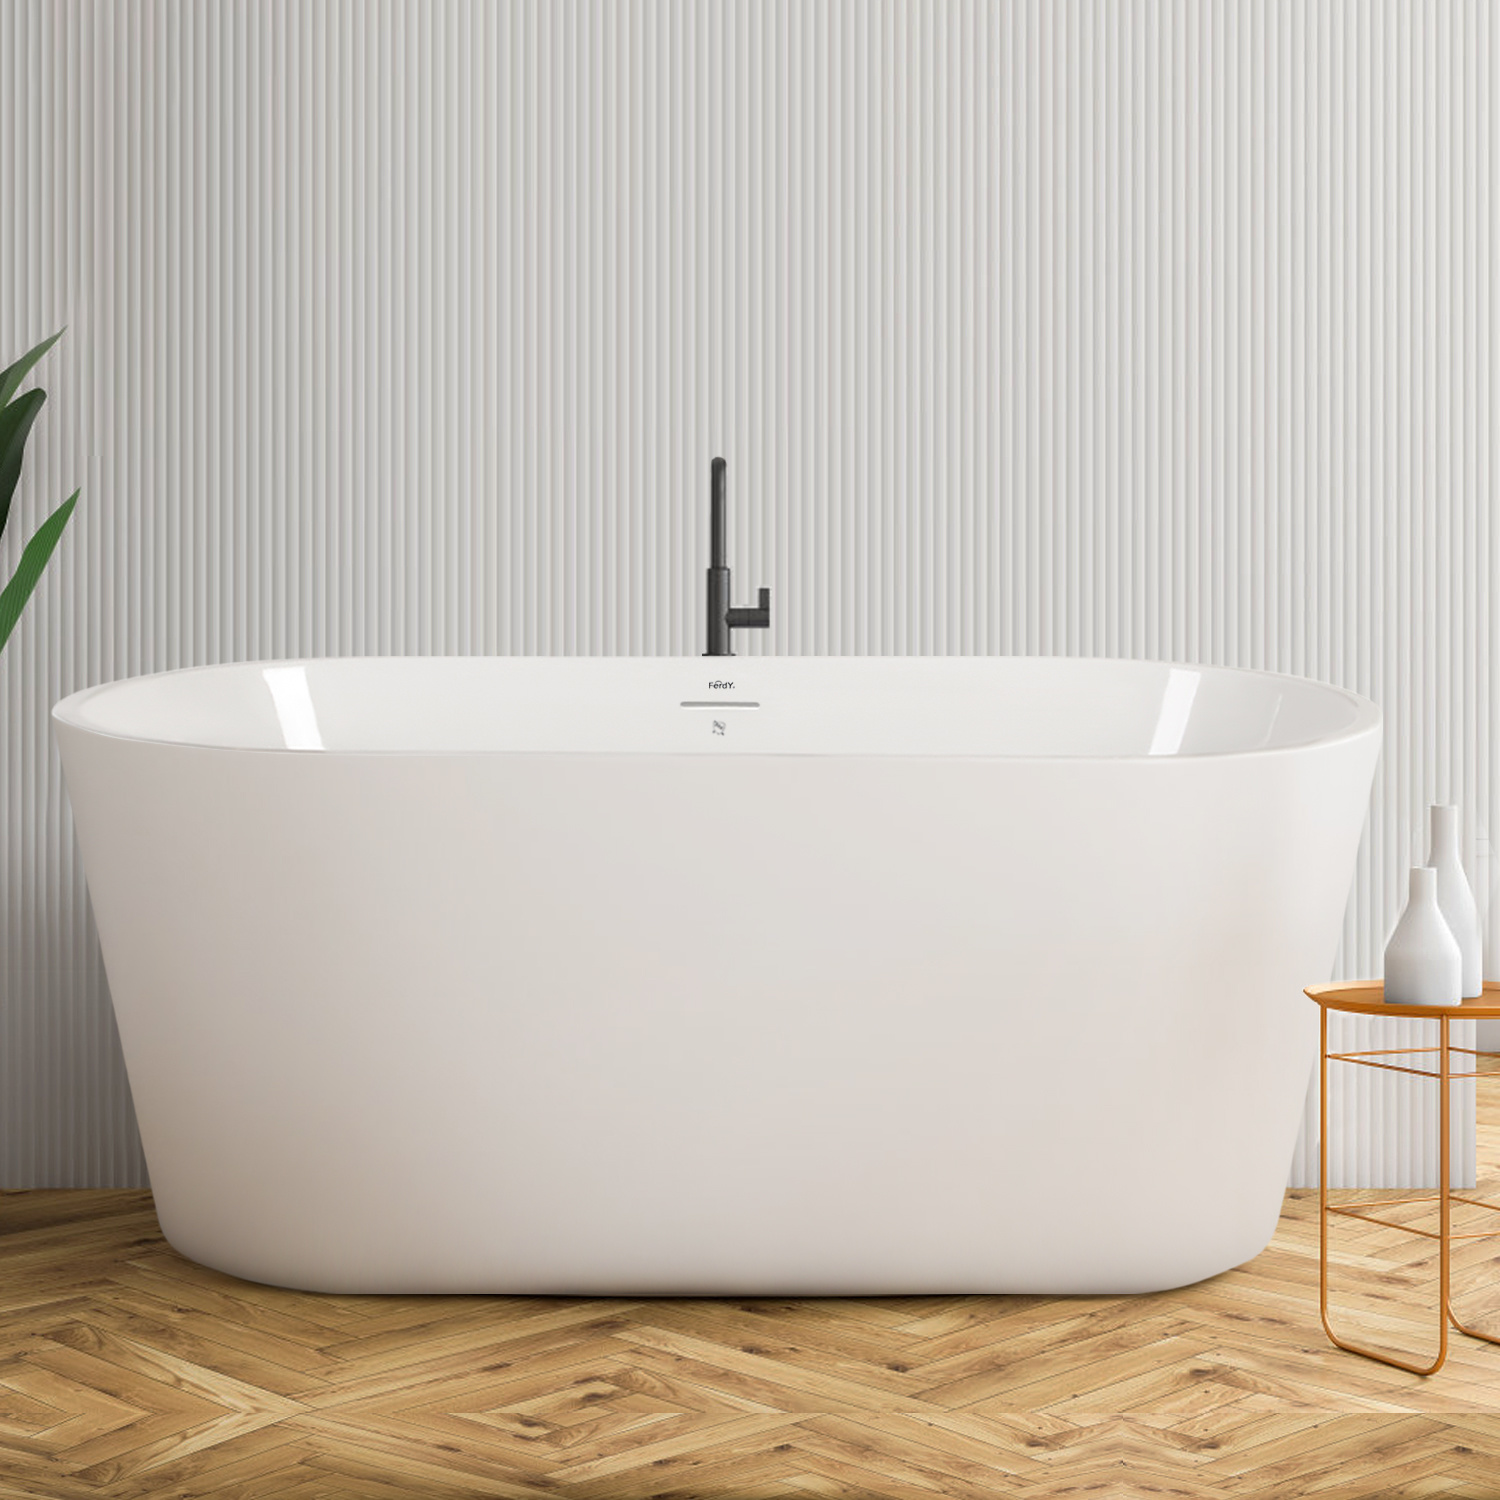 55inch Acrylic Freestanding Bathtub, Small Classic Oval Shape Acrylic Soaking Bathtub with Brushed Nickel Drain & Minimalist Linear Design Overflow, Modern-CASAINC